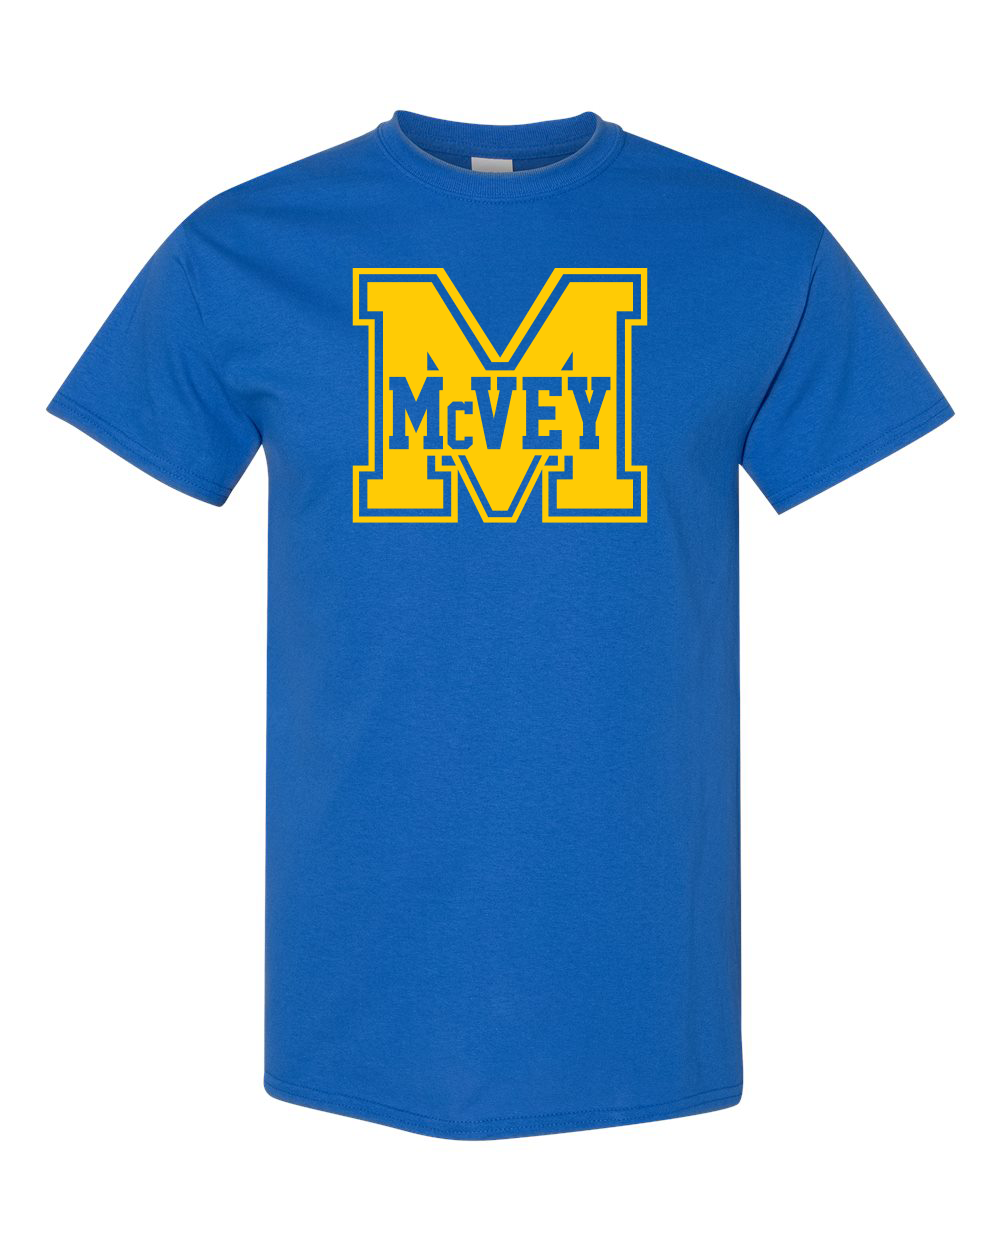 "M" McVey, Youth/Adult T-shirt